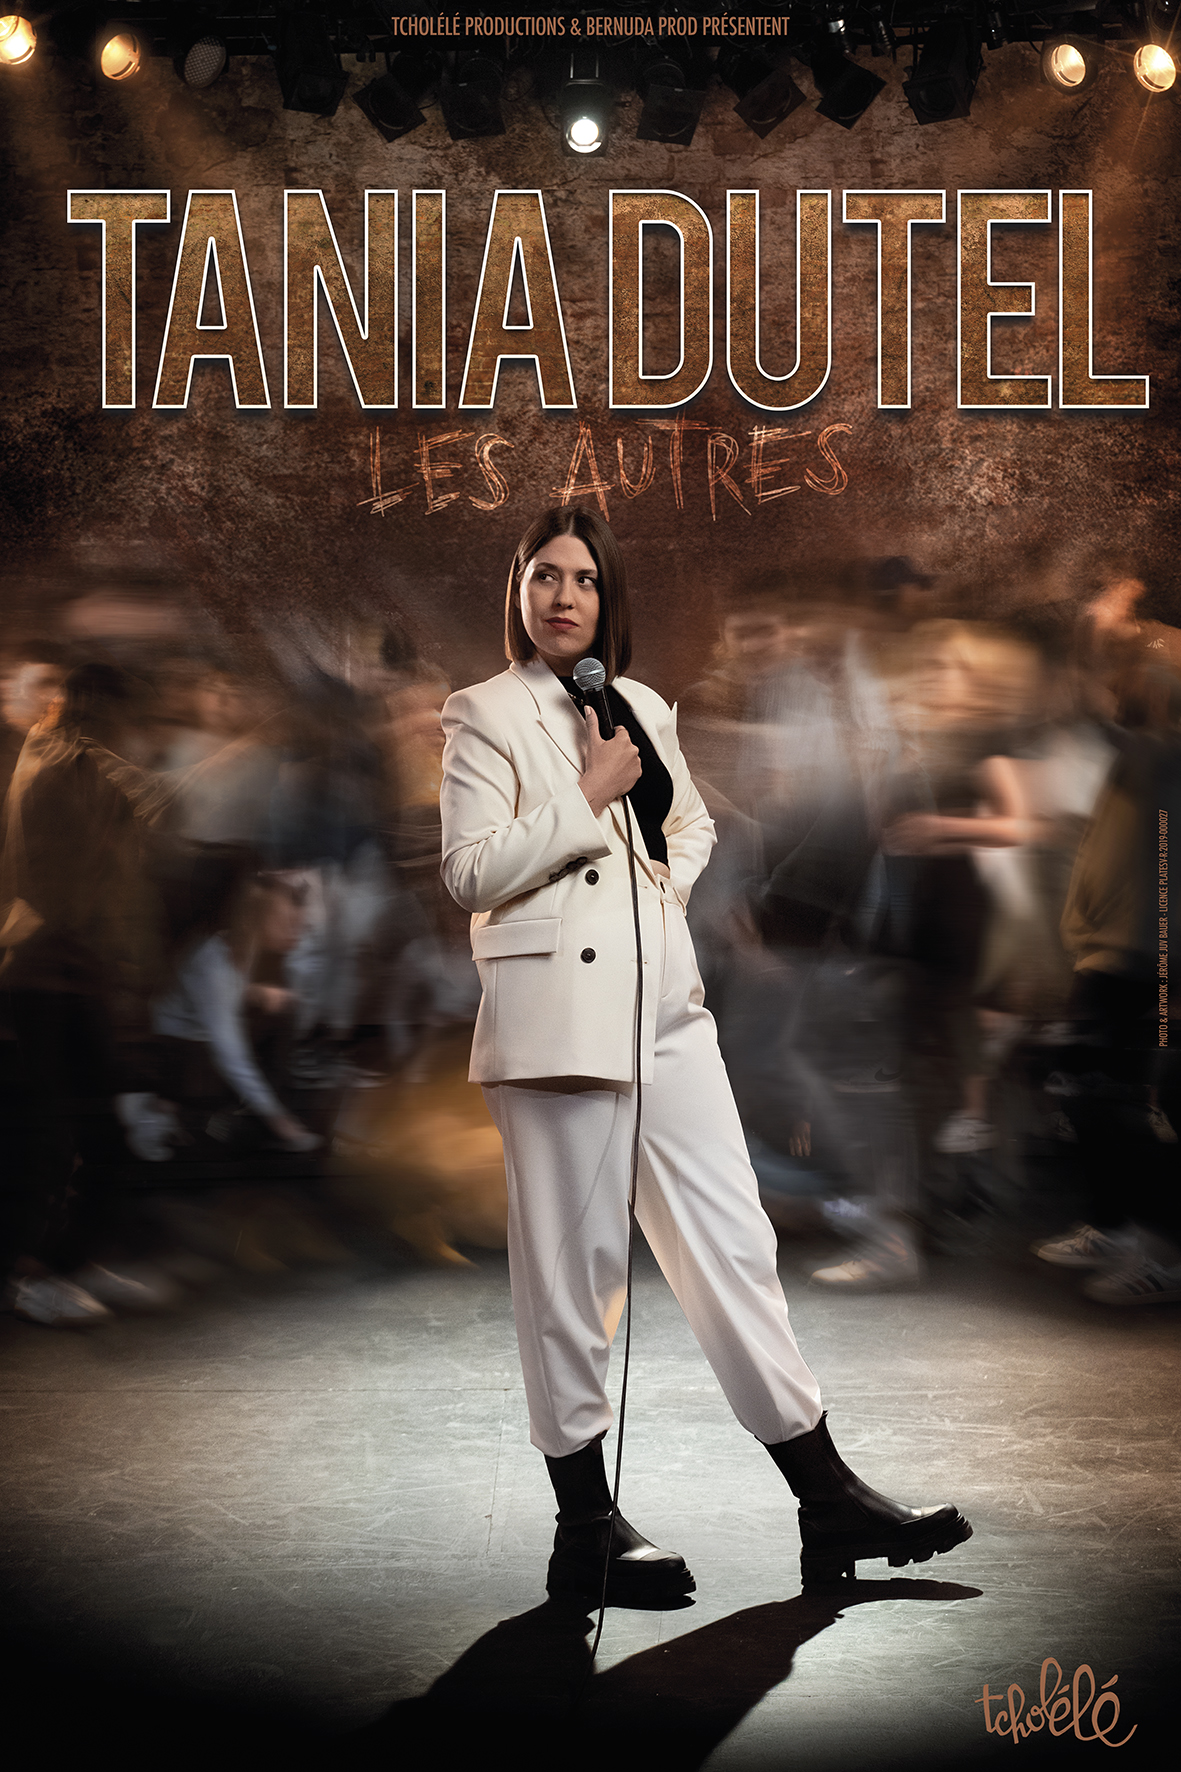 Tania Dutel - Les Autres